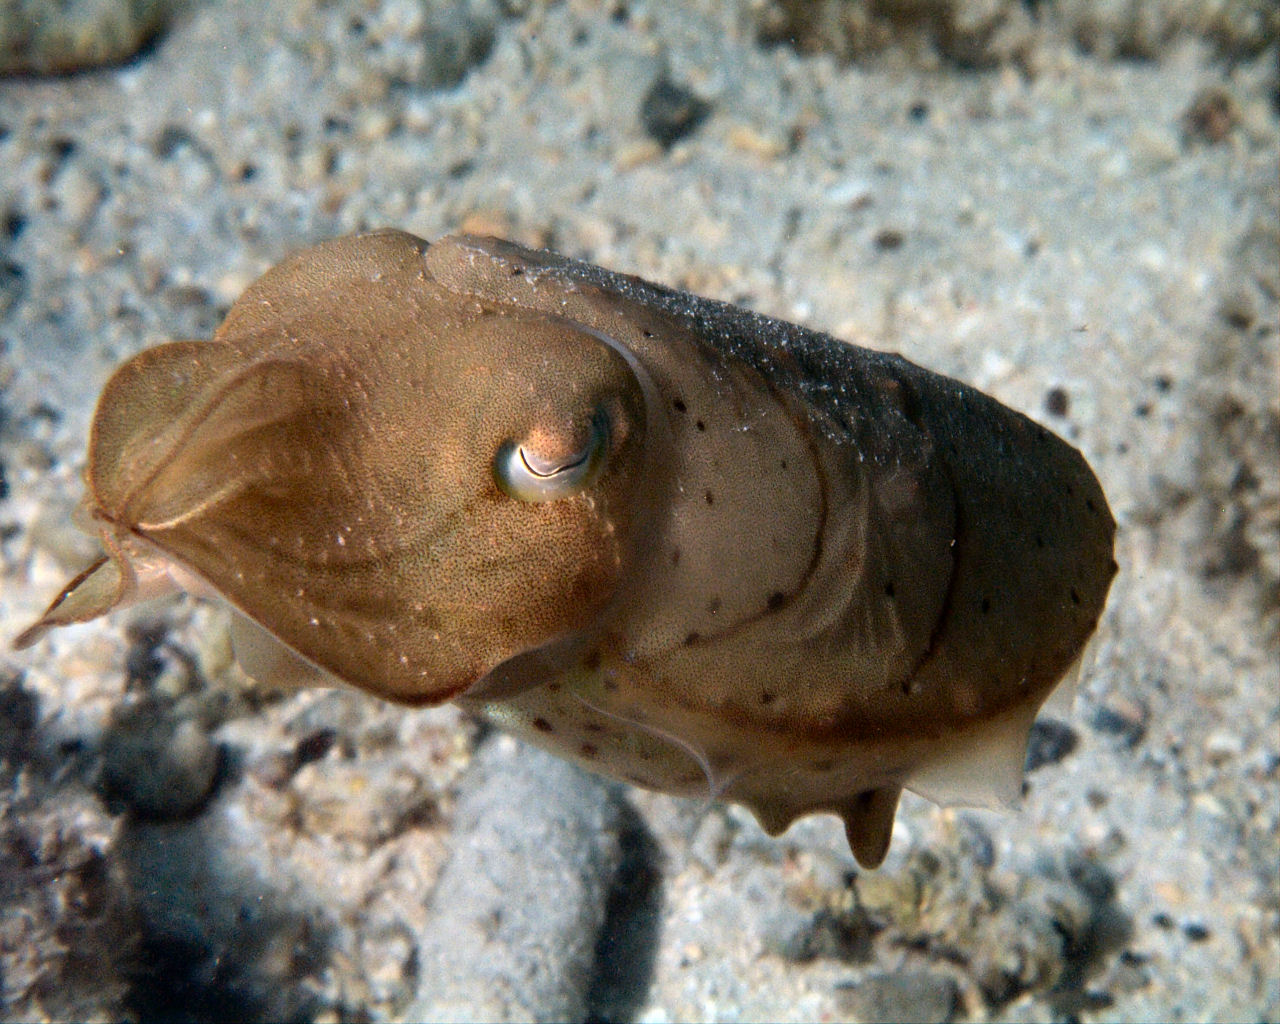 Small cuttlefish